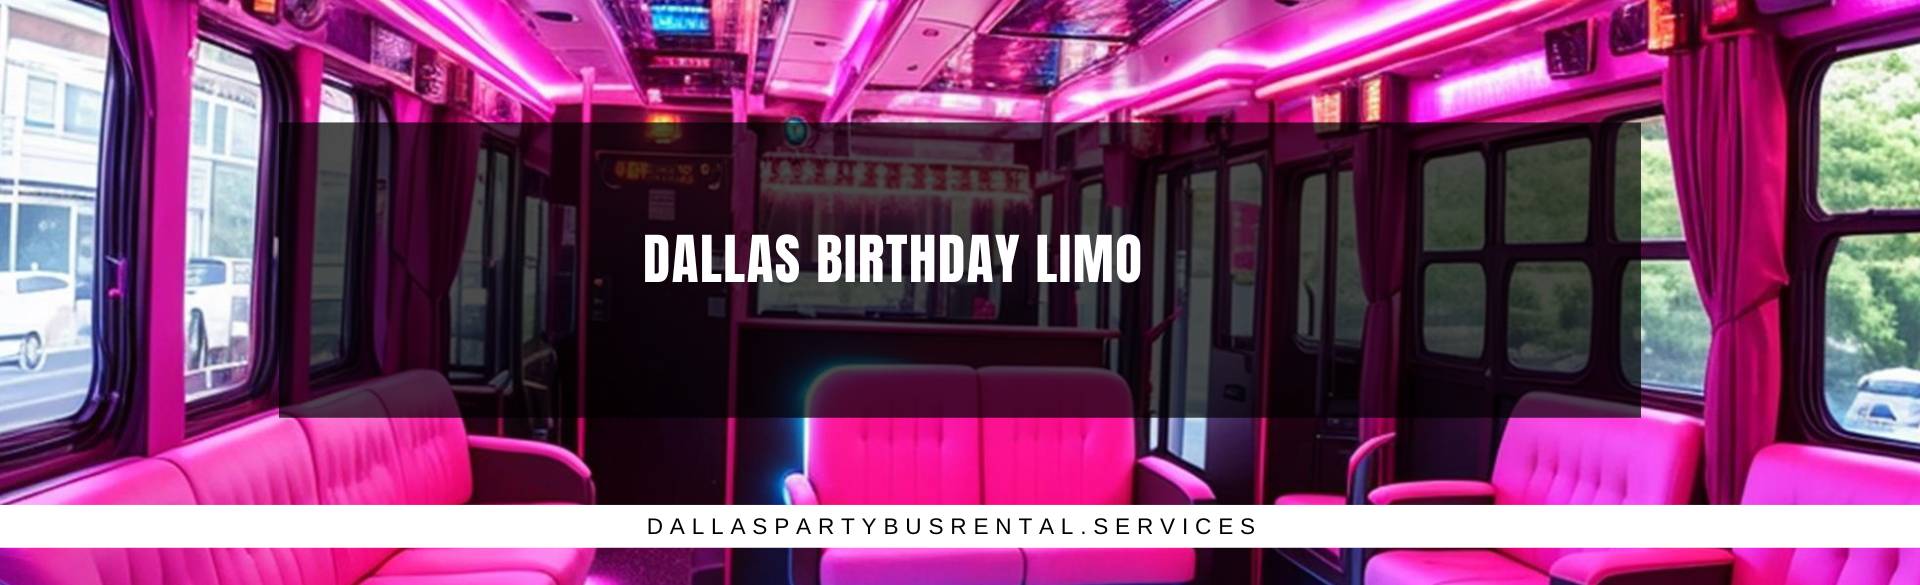 Dallas Birthday Limo